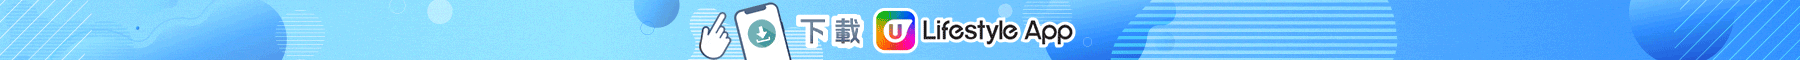 UL APP Banner